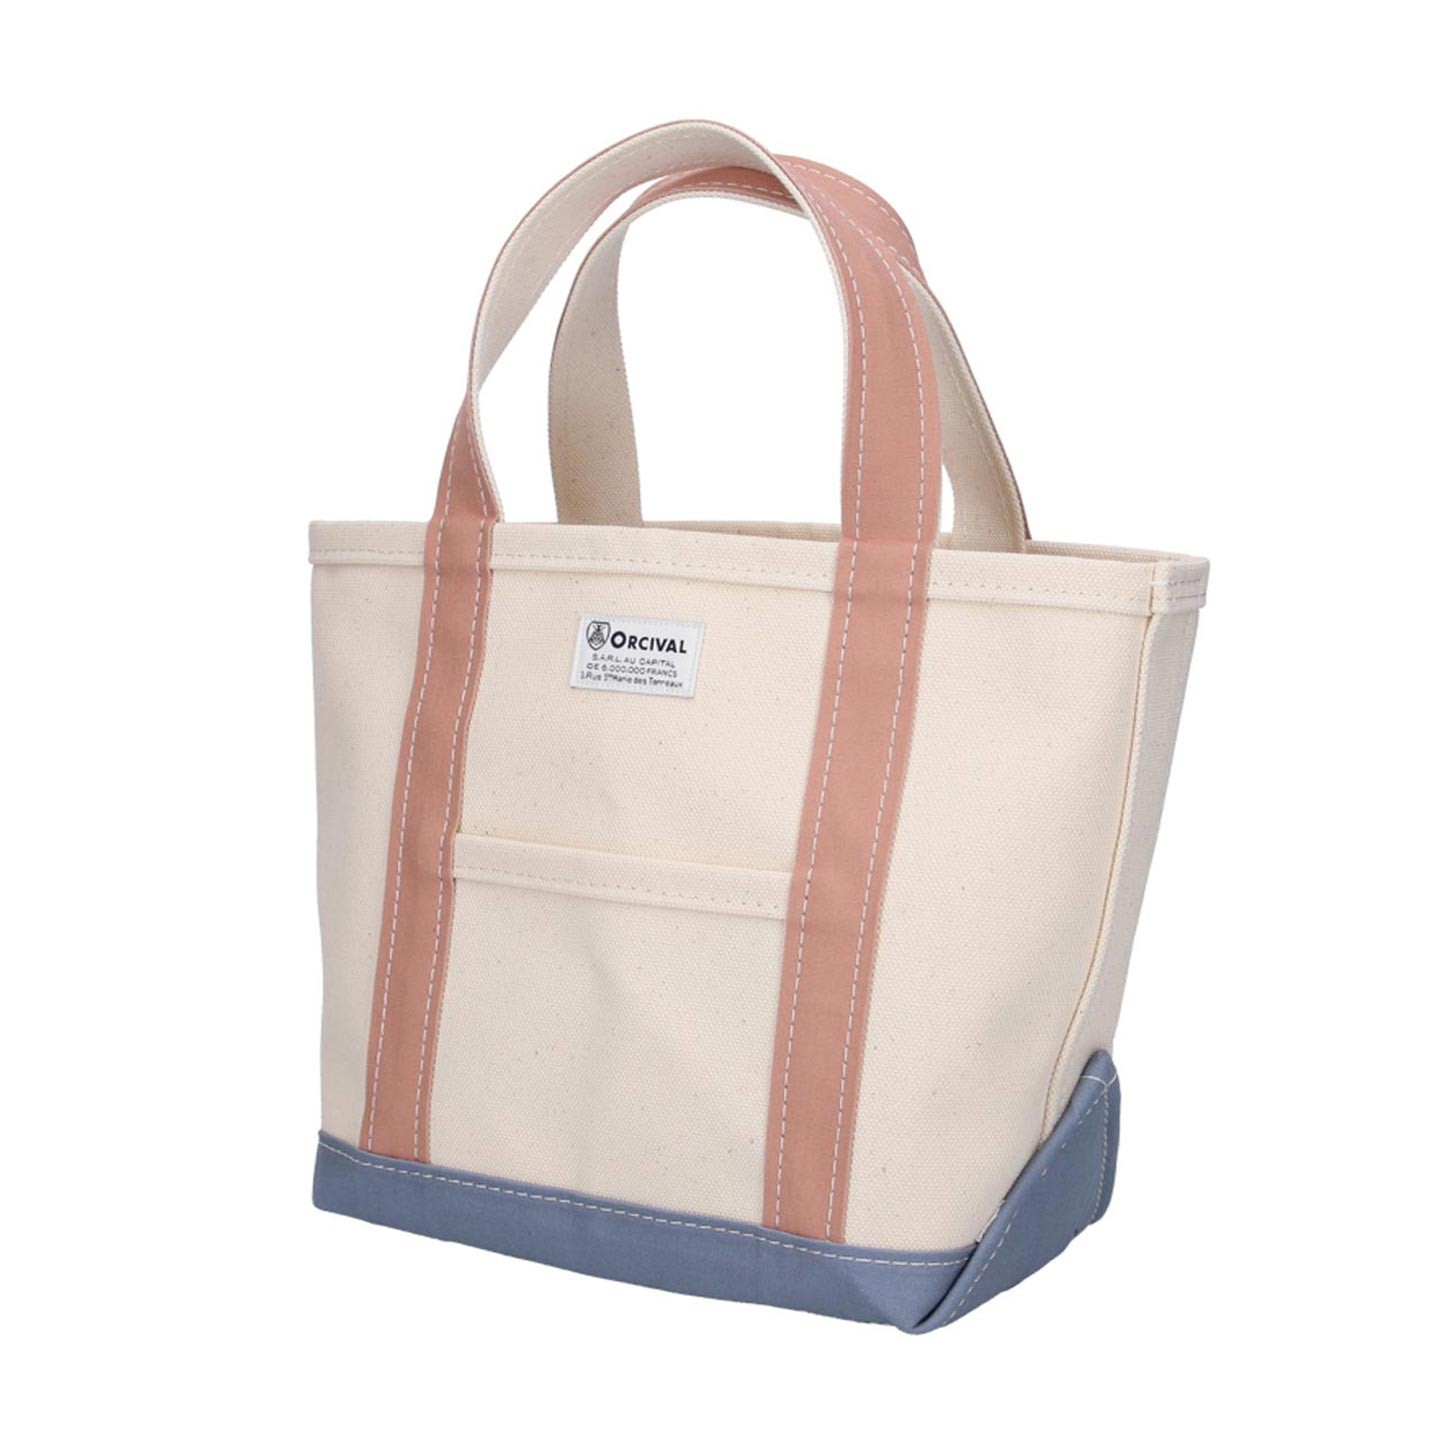 Le sac Ecru / Smocky Pink / Greyish Blue tote-bag Orcival